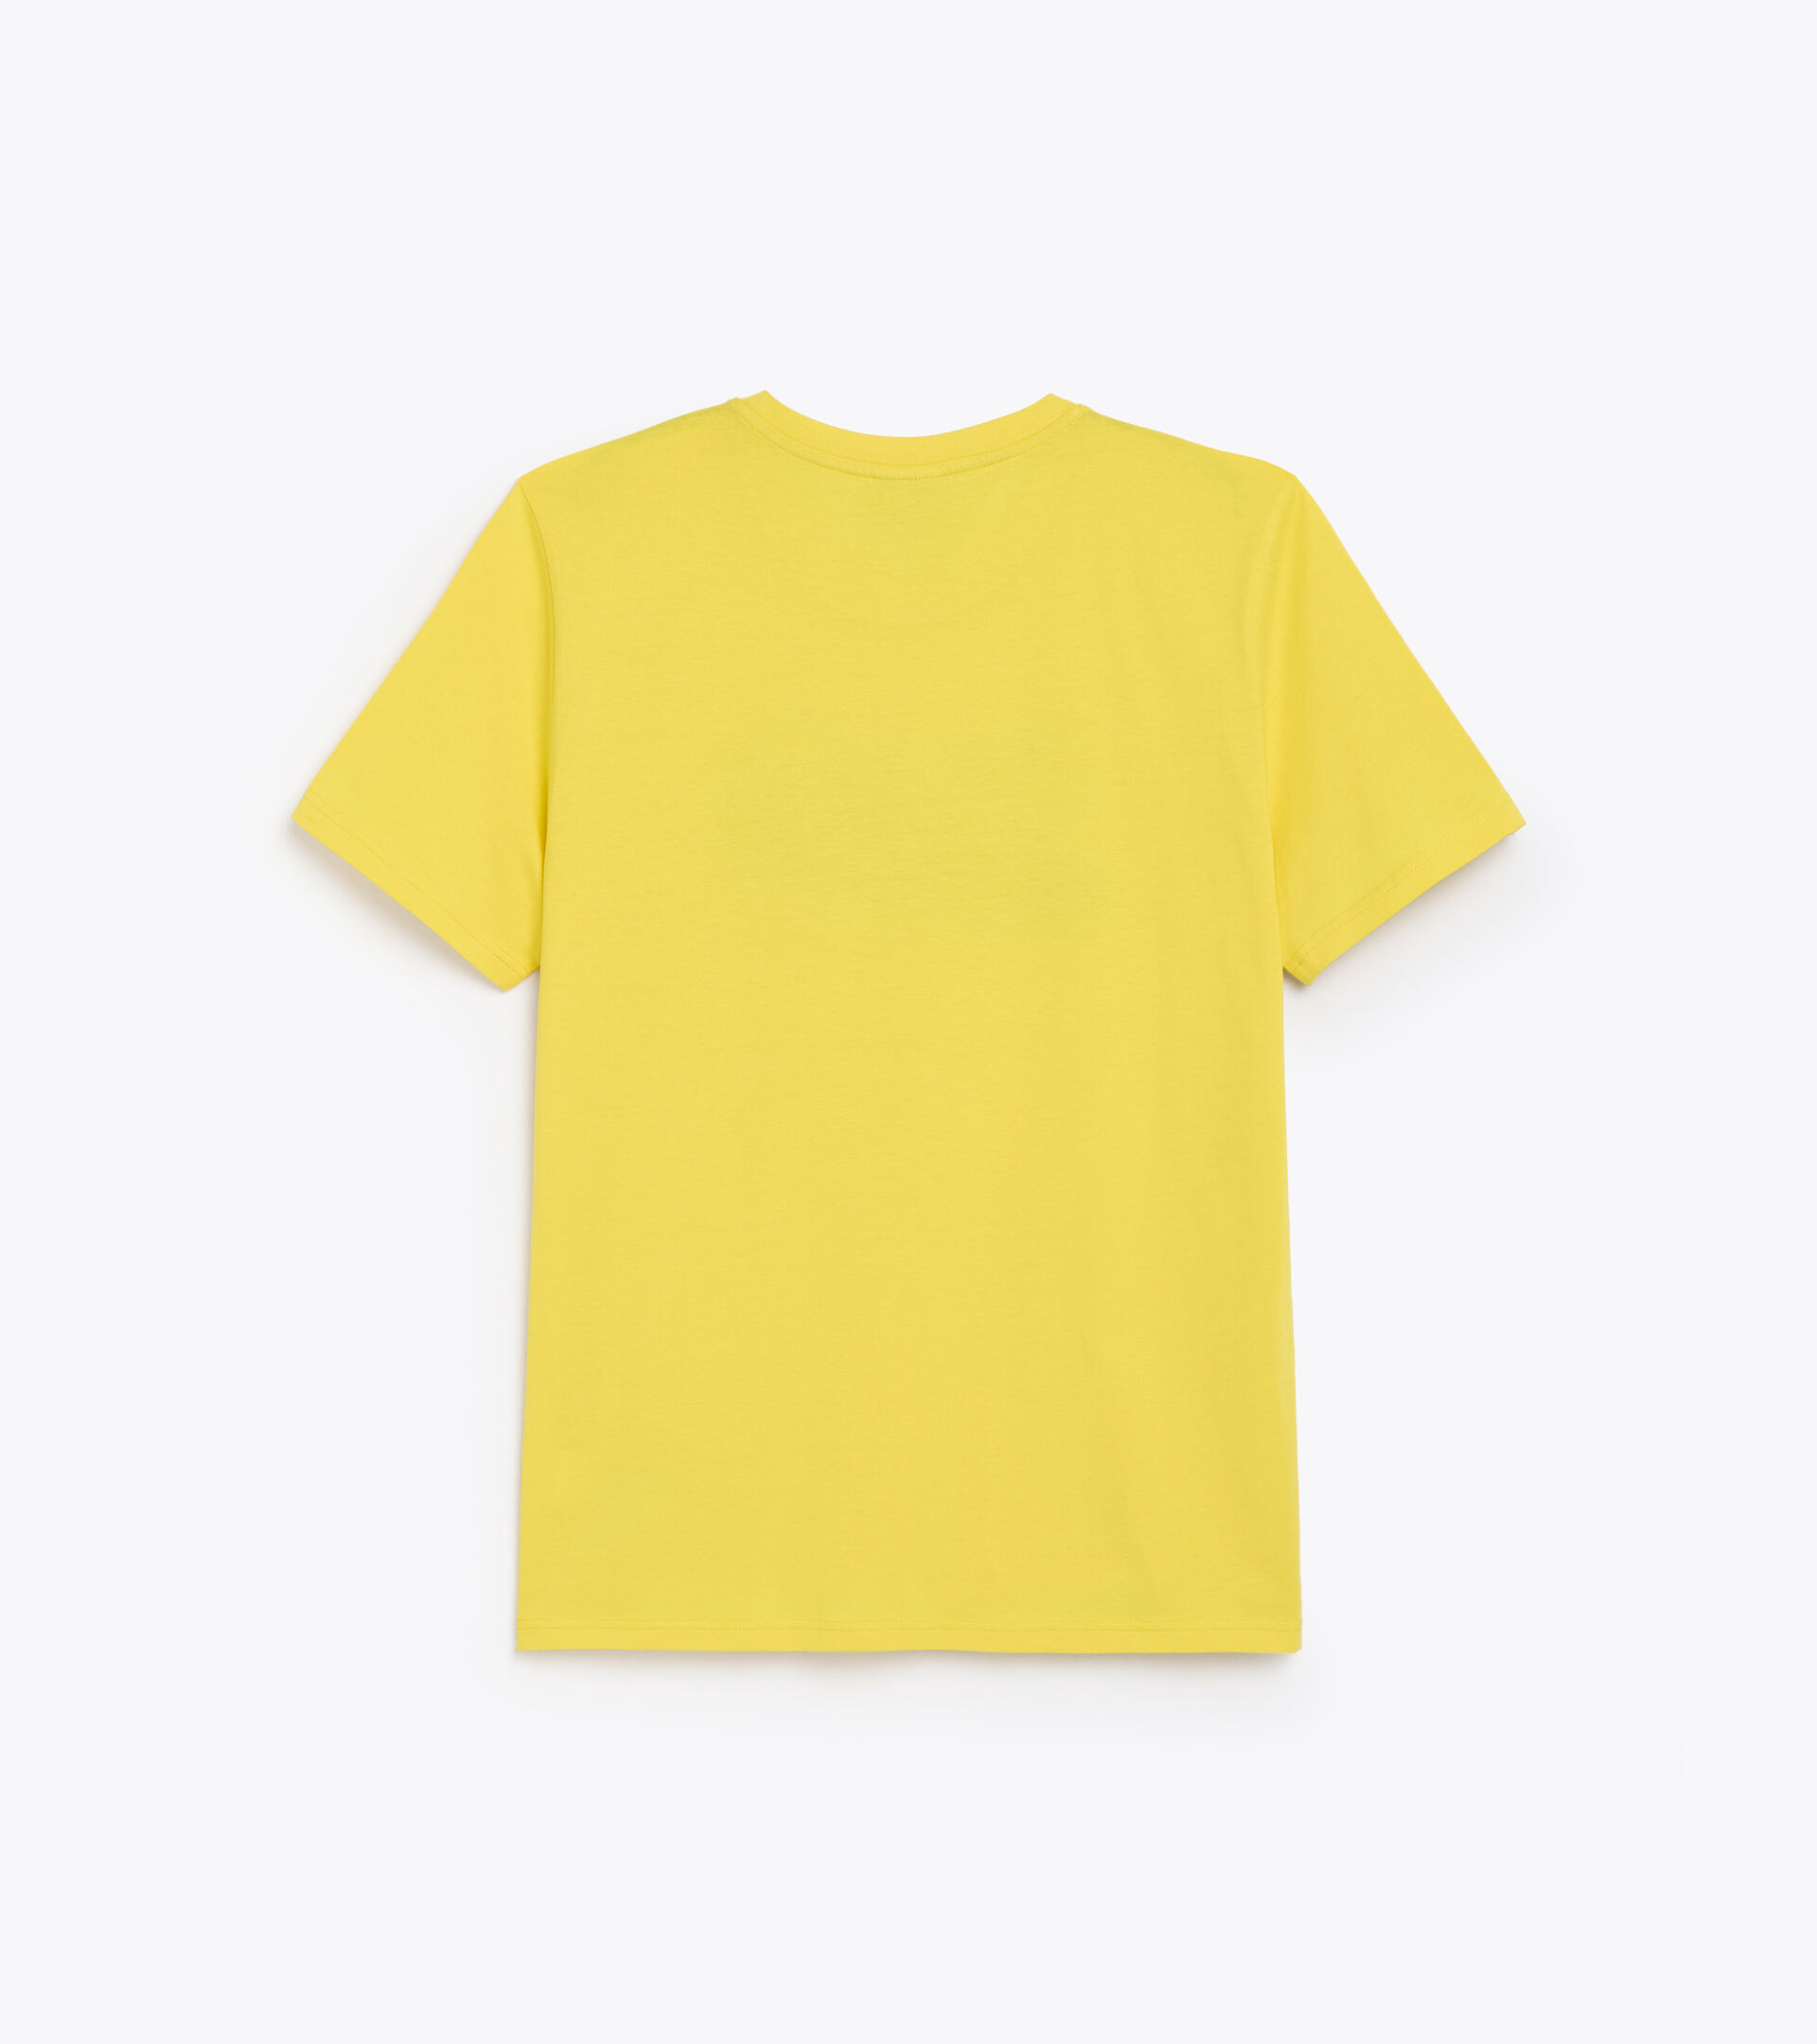 Cotton t-shirt - Men T-SHIRT SS ARCHIVE VIBRANT YELLOW - Diadora